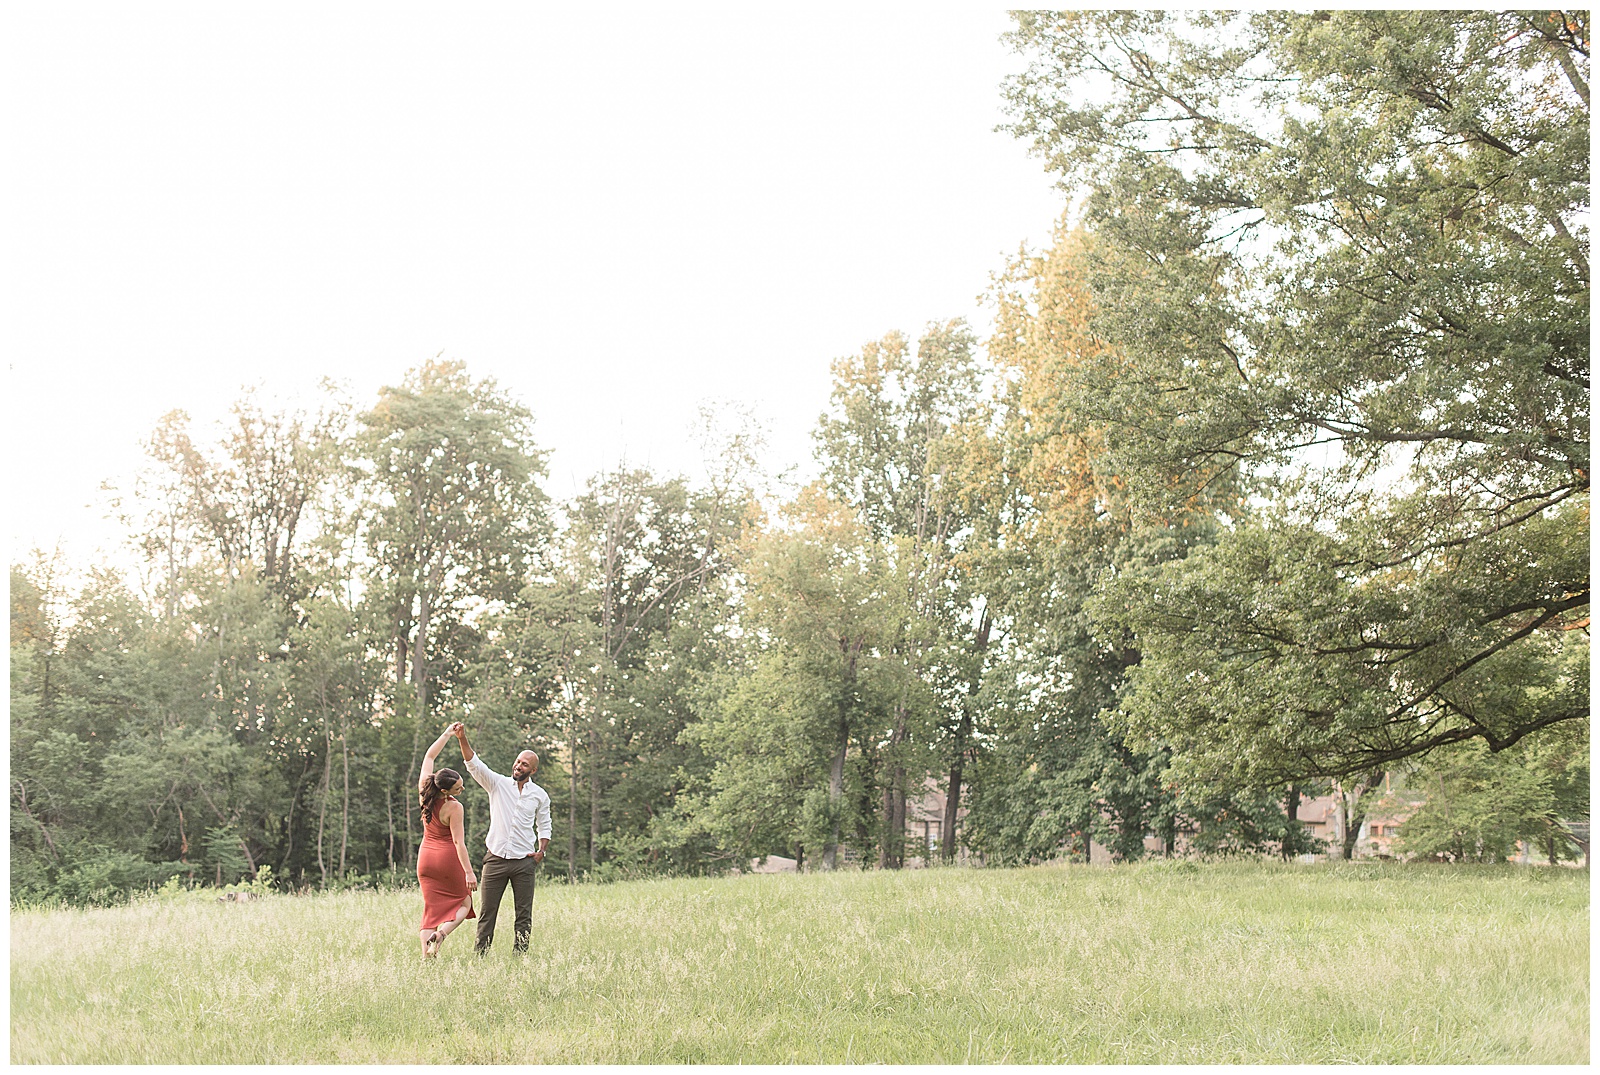 guy twirls girl in grassy field by row of trees on sunny summer evening in doylestown pennsylvania